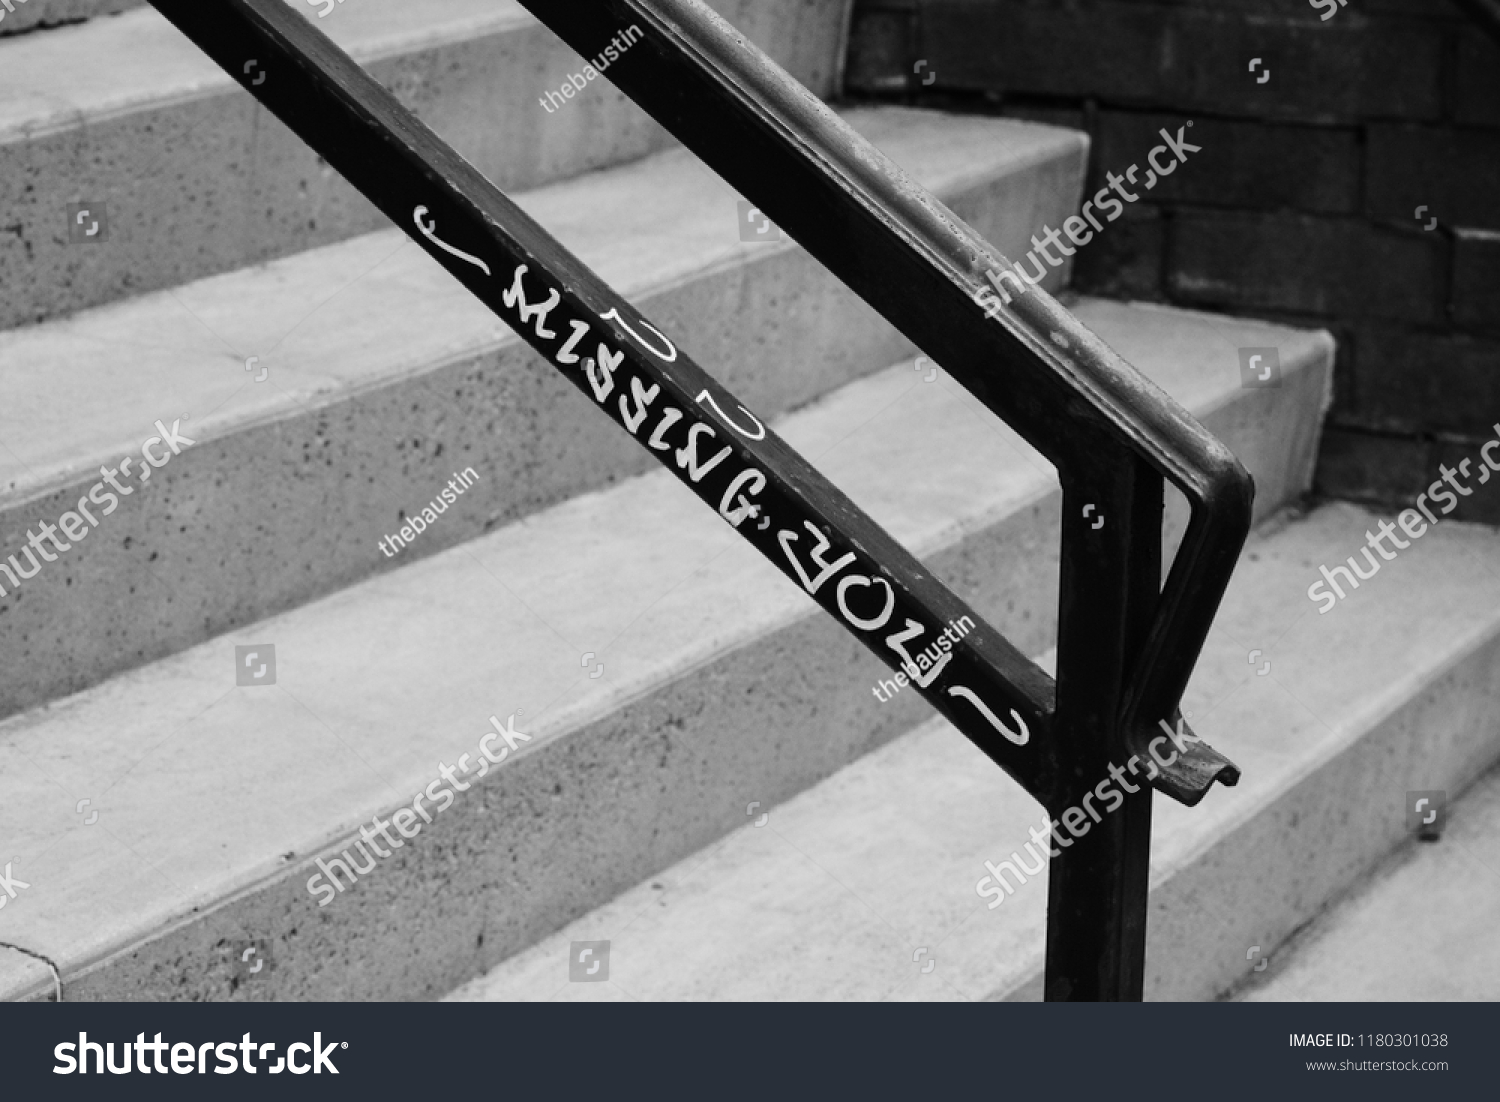 Sentimental handrail graffito #1180301038